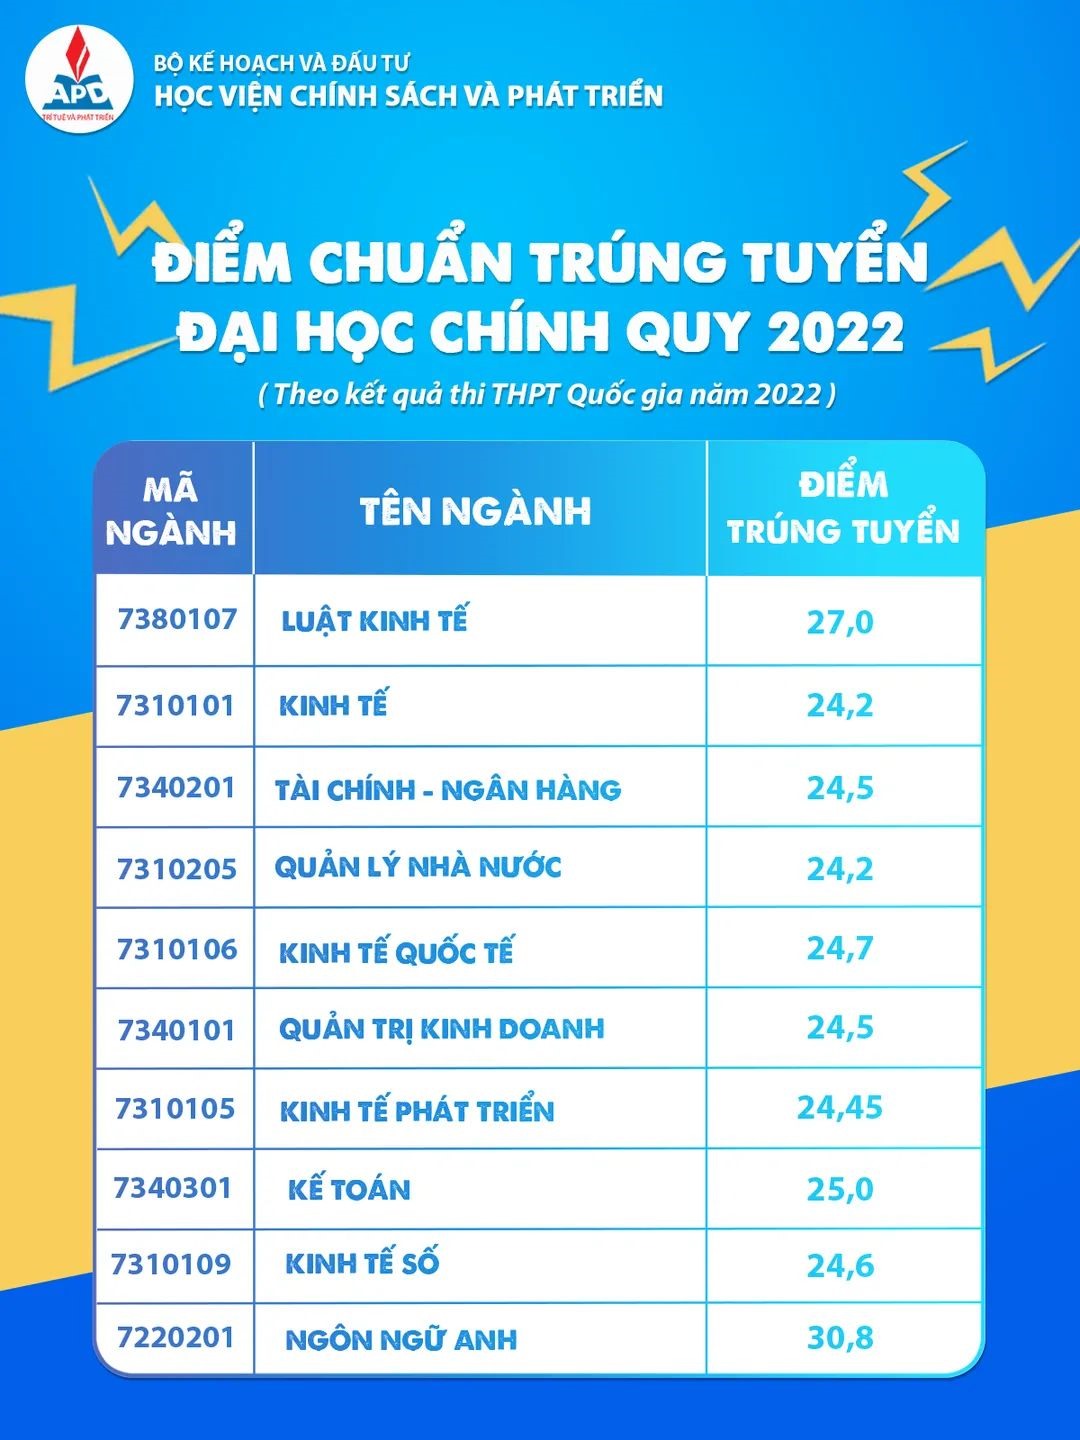 hoc vien chinh sach va phat trien chinh thuc cong bo diem chuan nam 2022 hinh 1